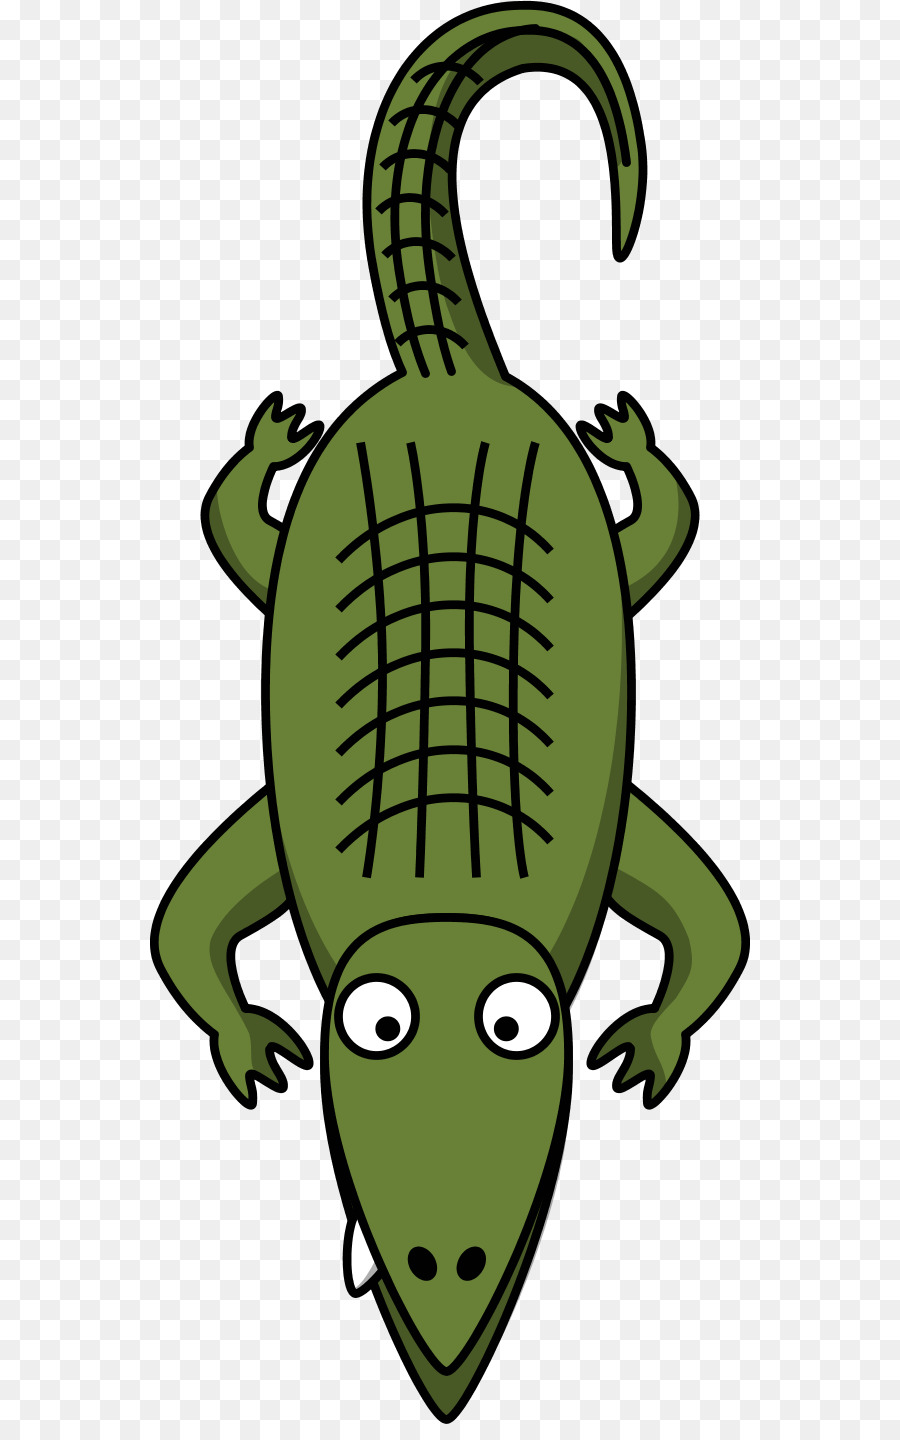 alligator images clip art